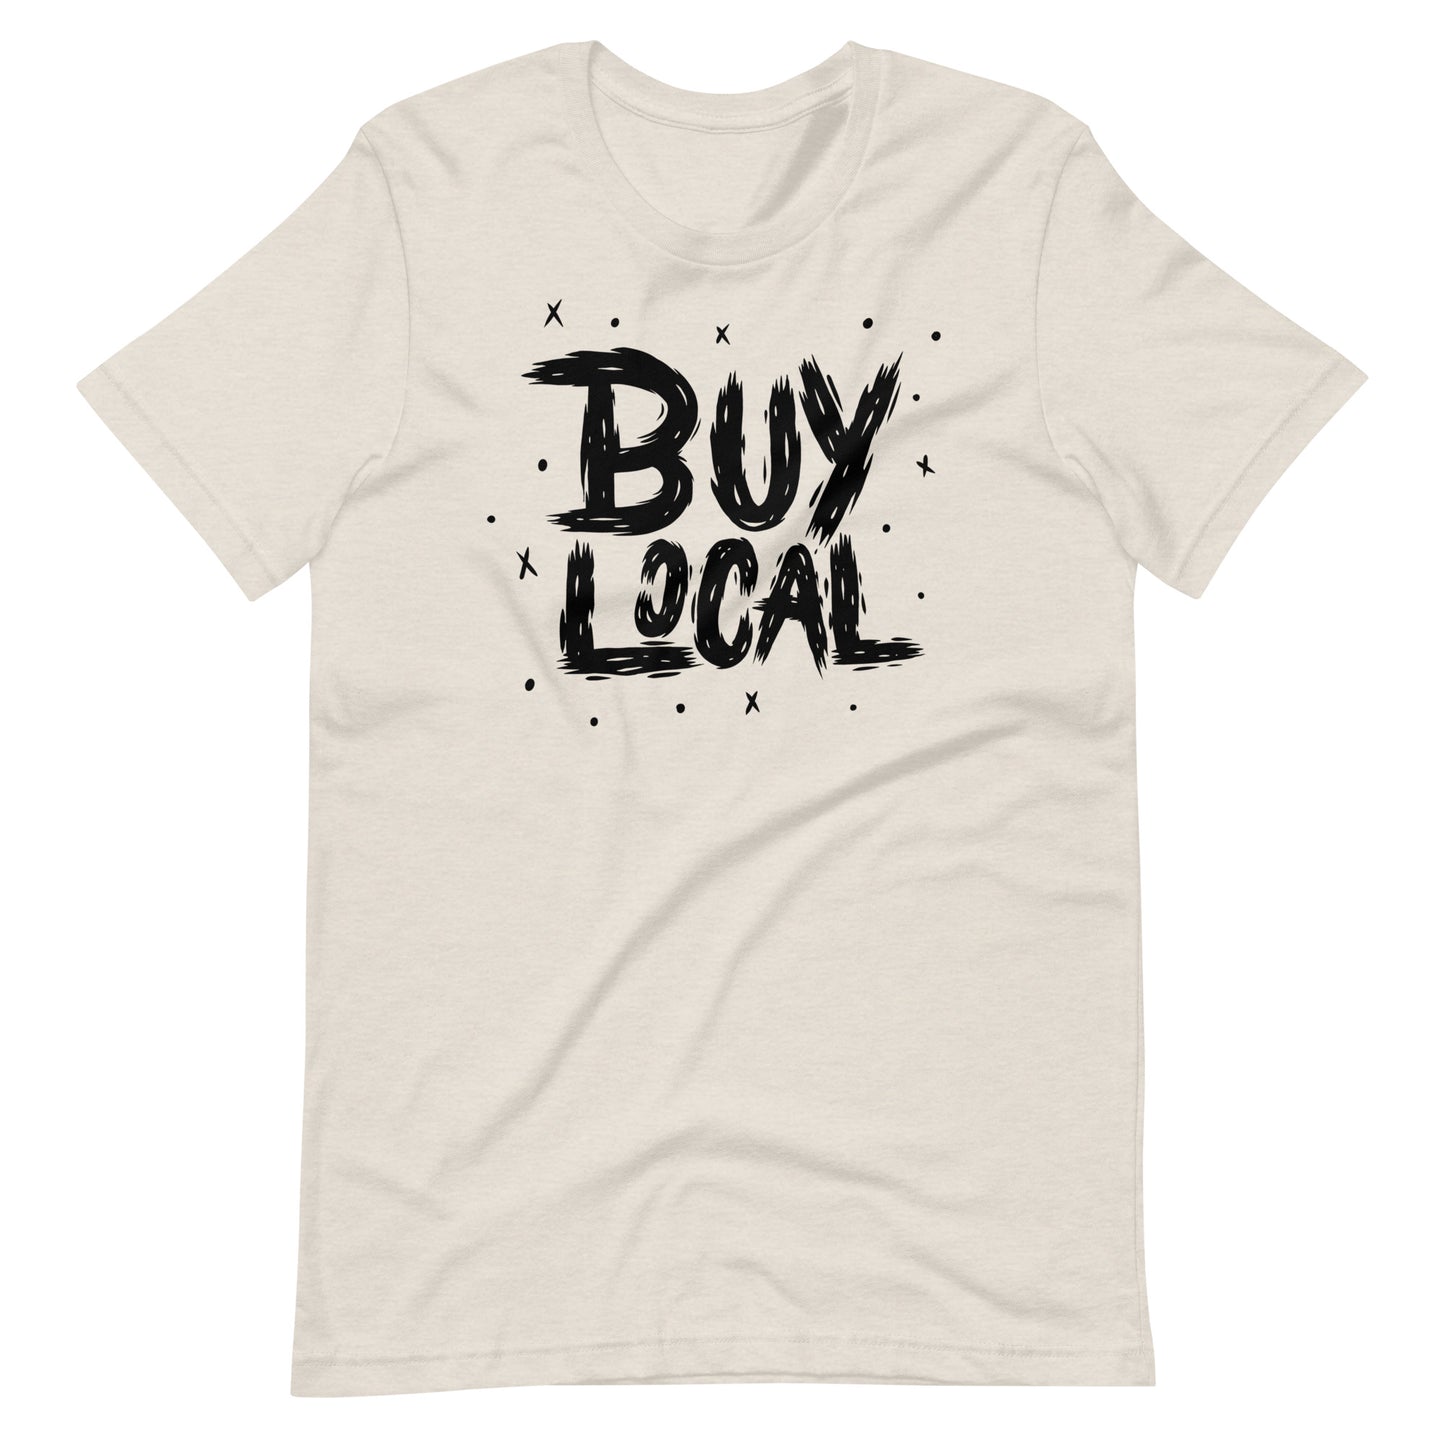 Wulf Clothing “Buy Local” Tee